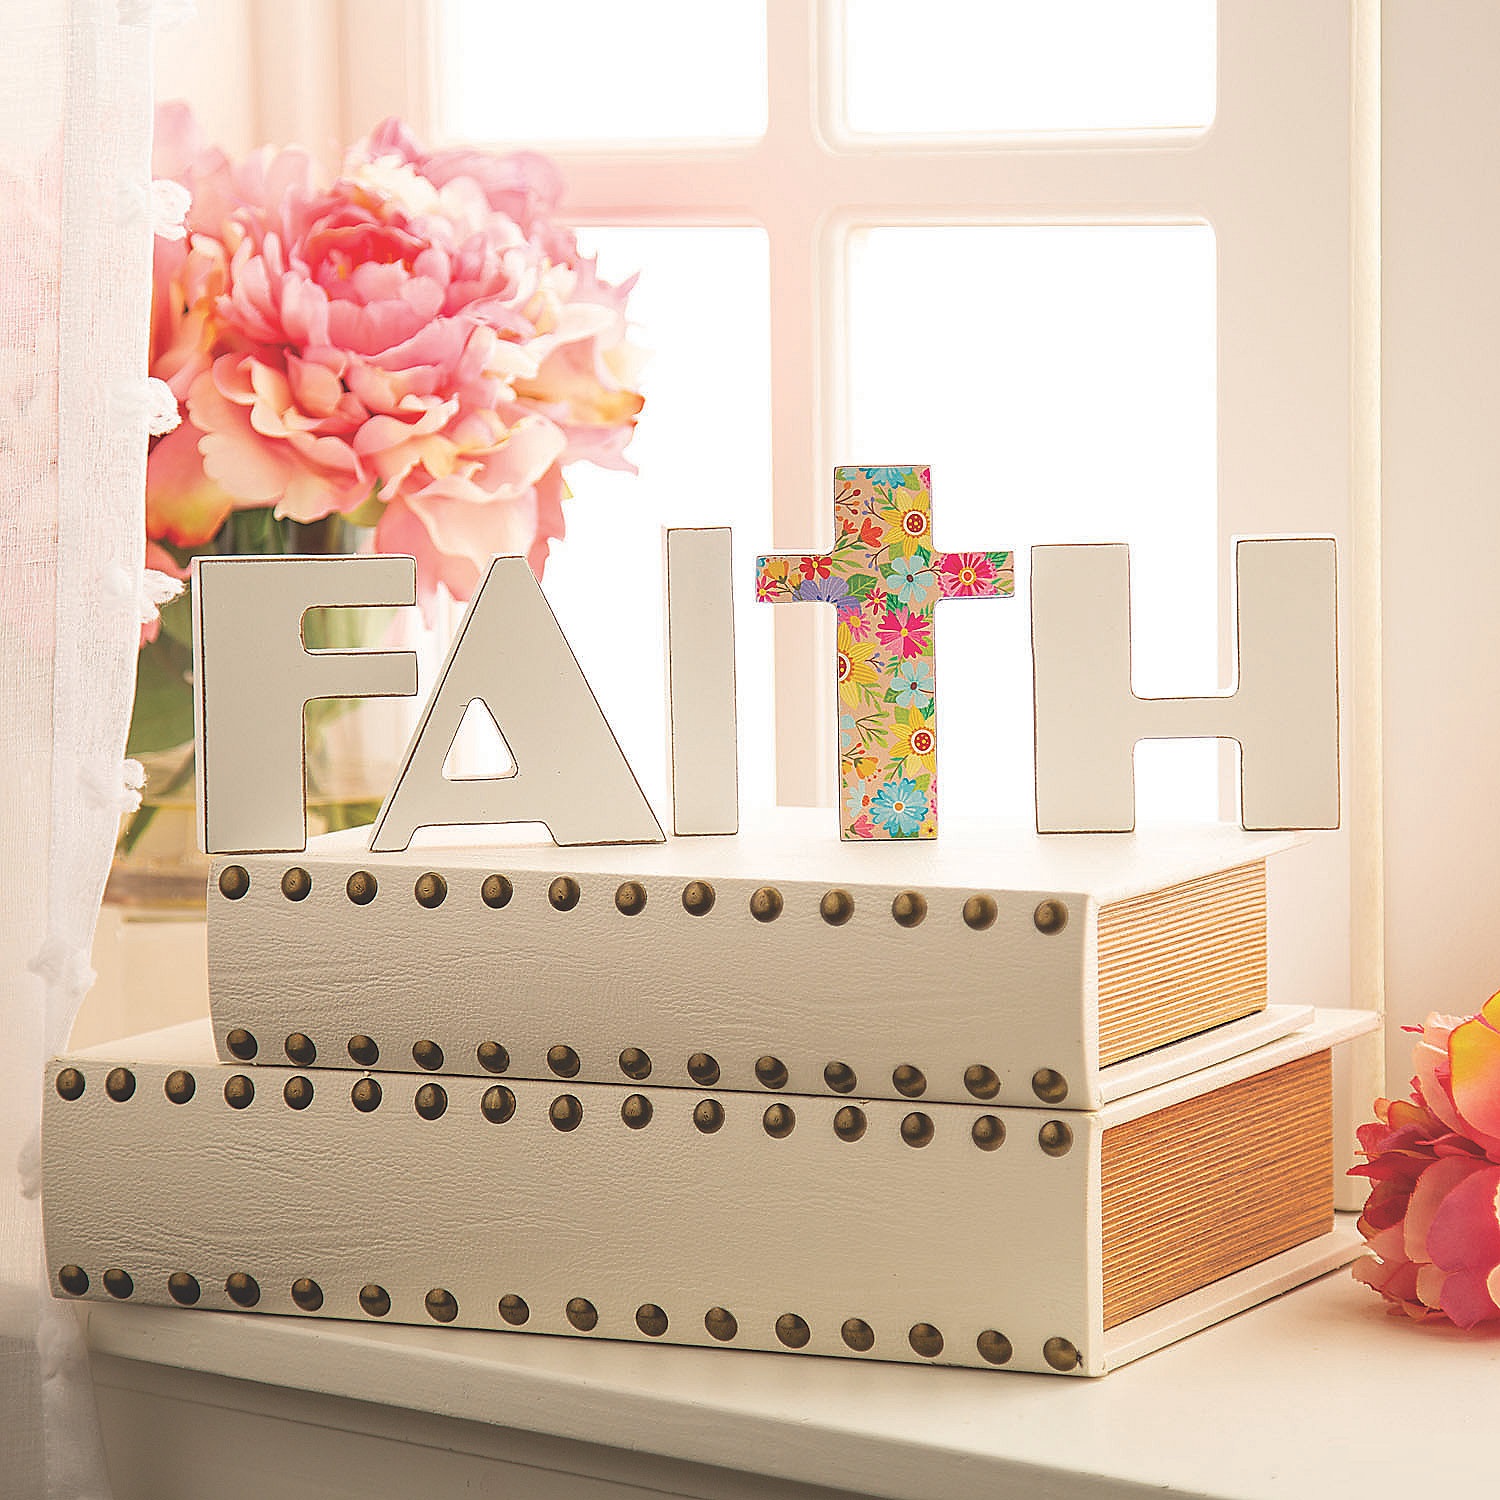 interchangeable-faith-tabletop-decoration-set_13845449-a02